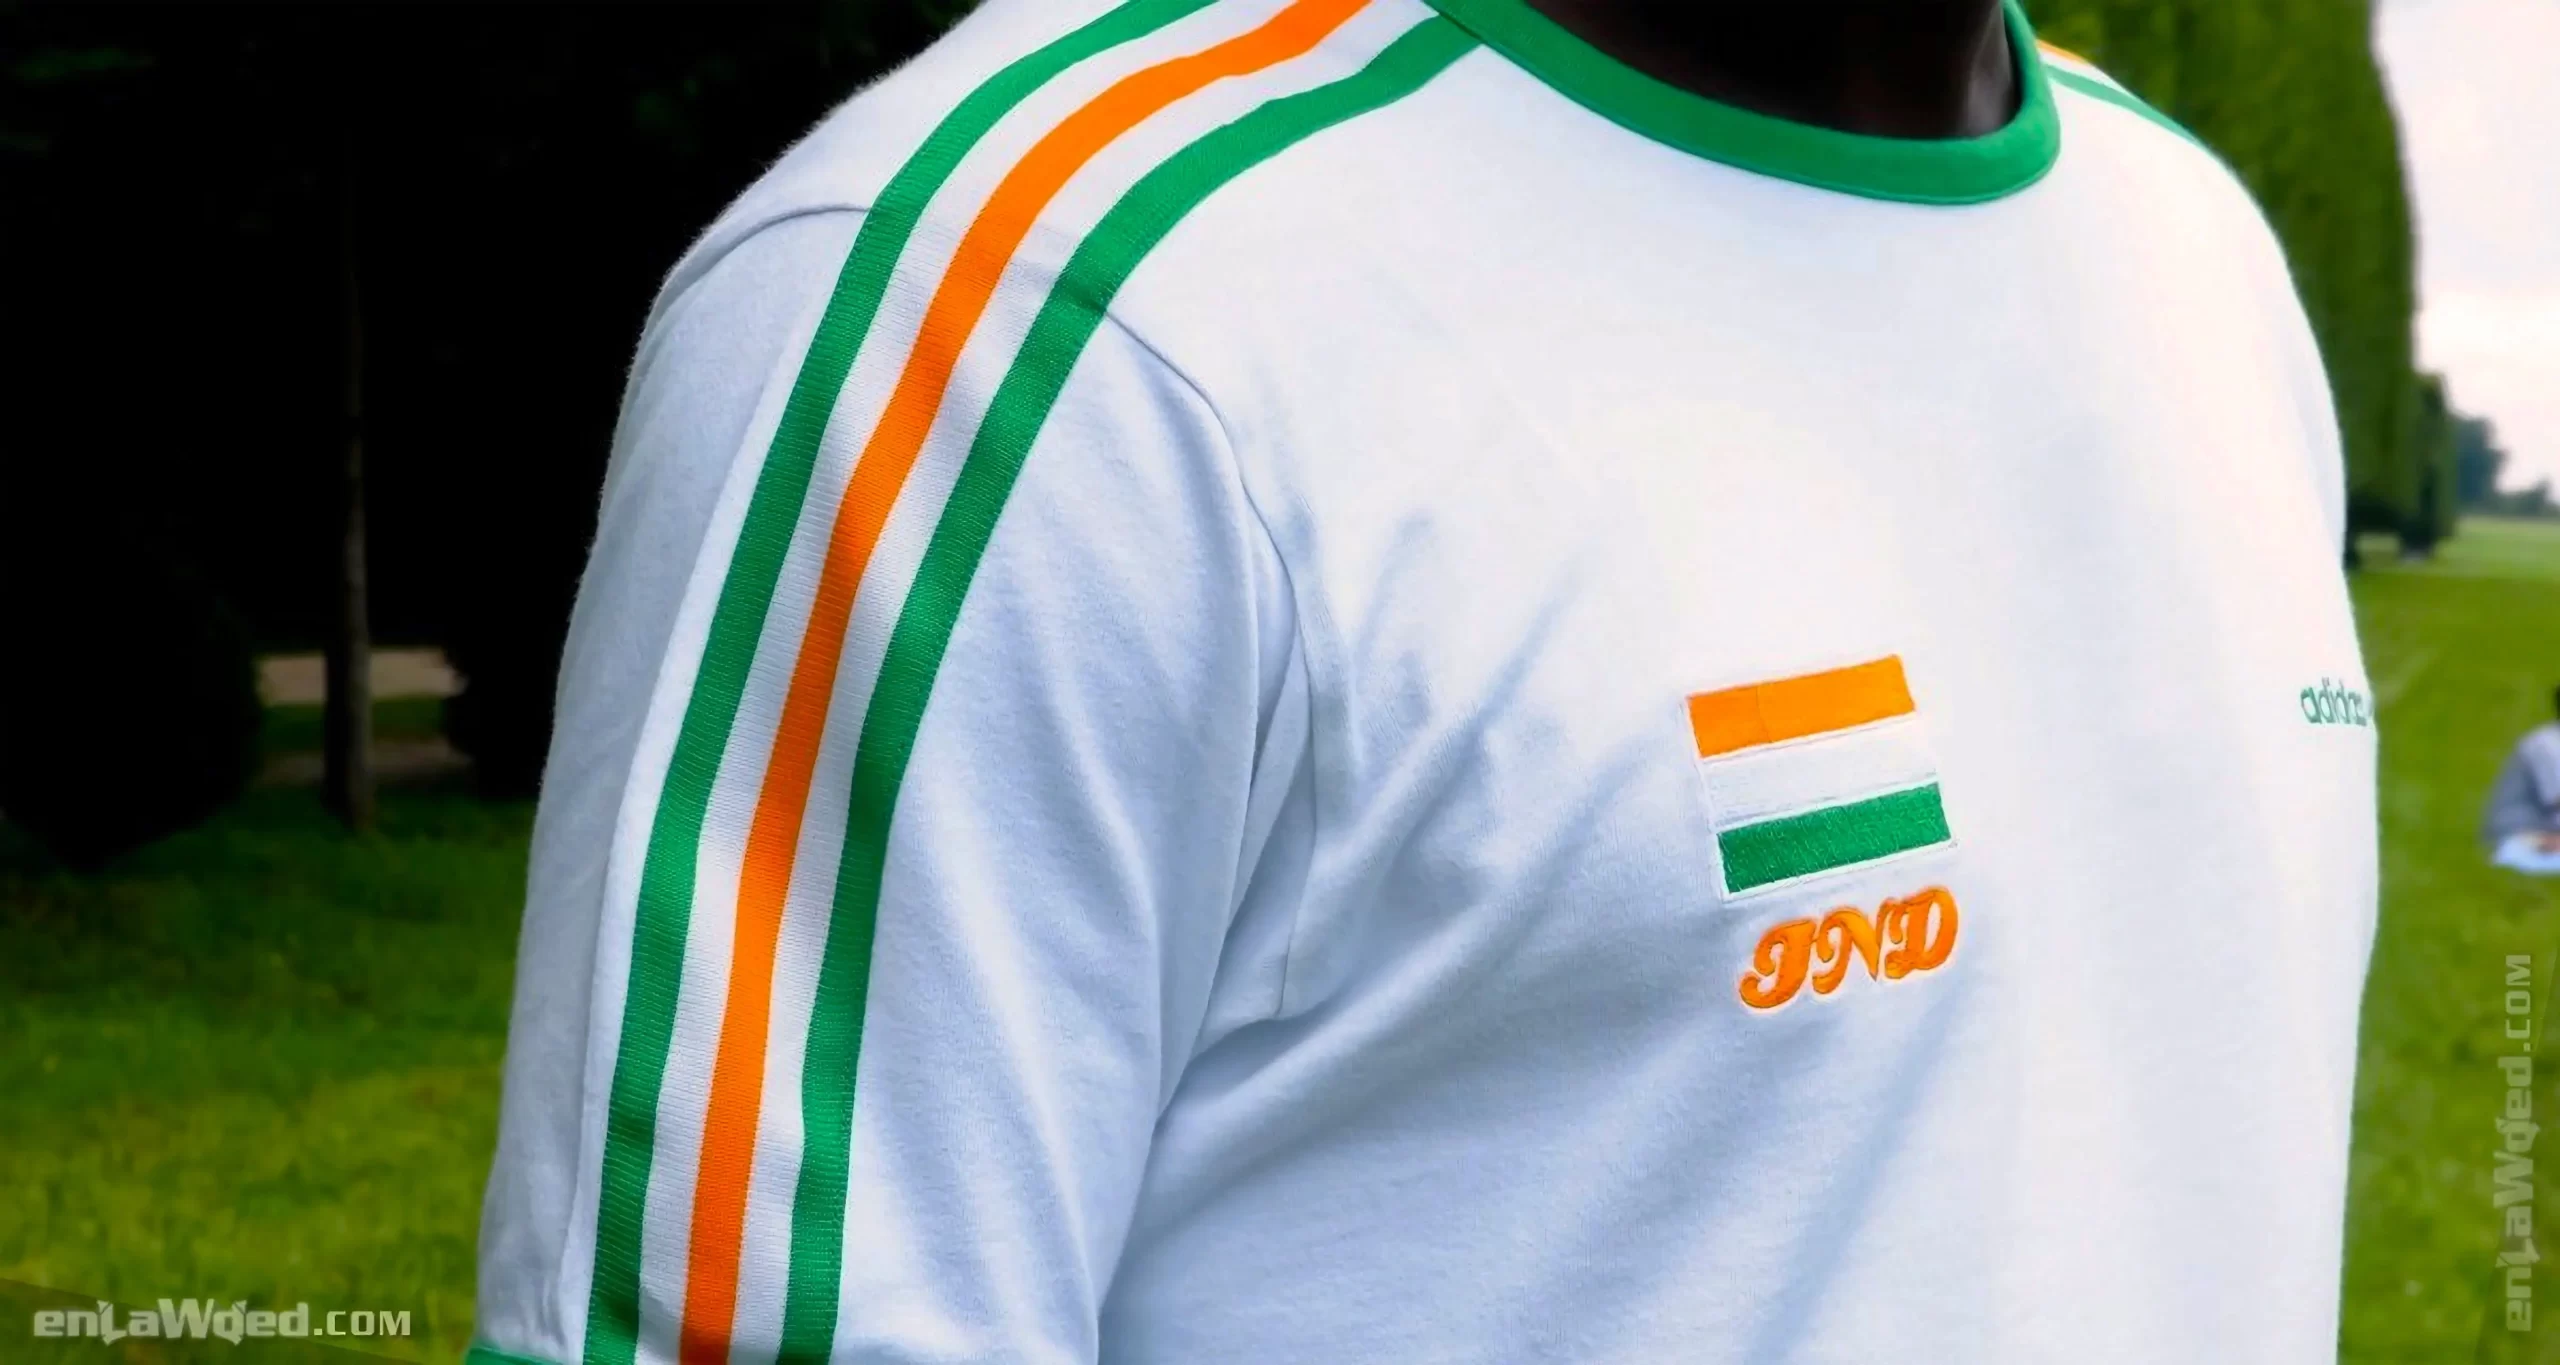 Men’s 2005 India T-Shirt by Adidas Originals: Proven (EnLawded.com file #lmcfvv6gv0jh9r7uezd)